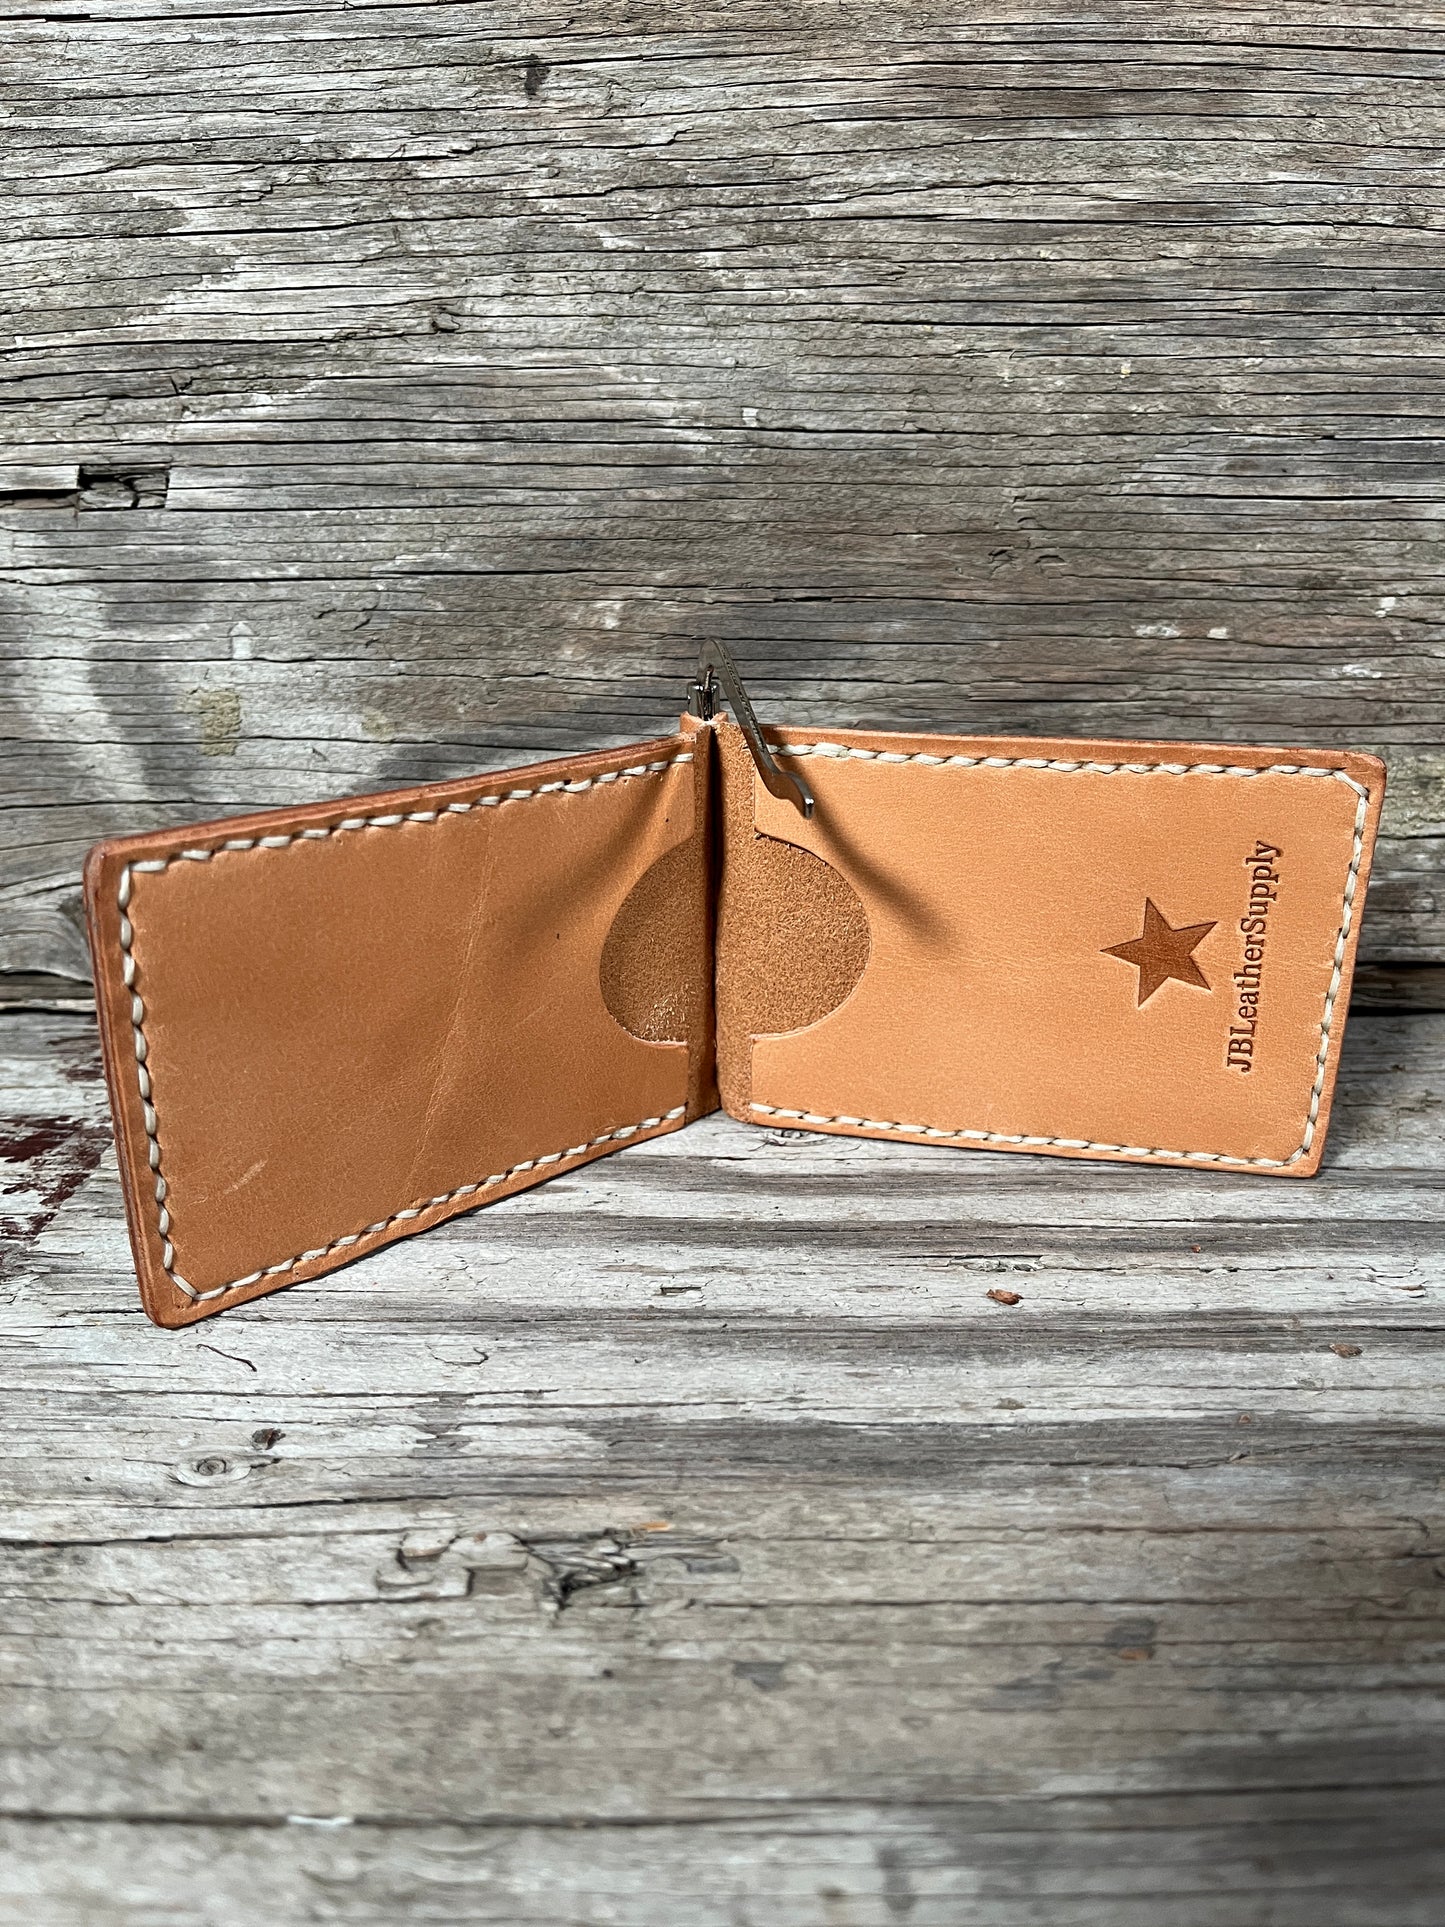 Handmade Leather Wallets, Money Clip Wallet-Black Bridle